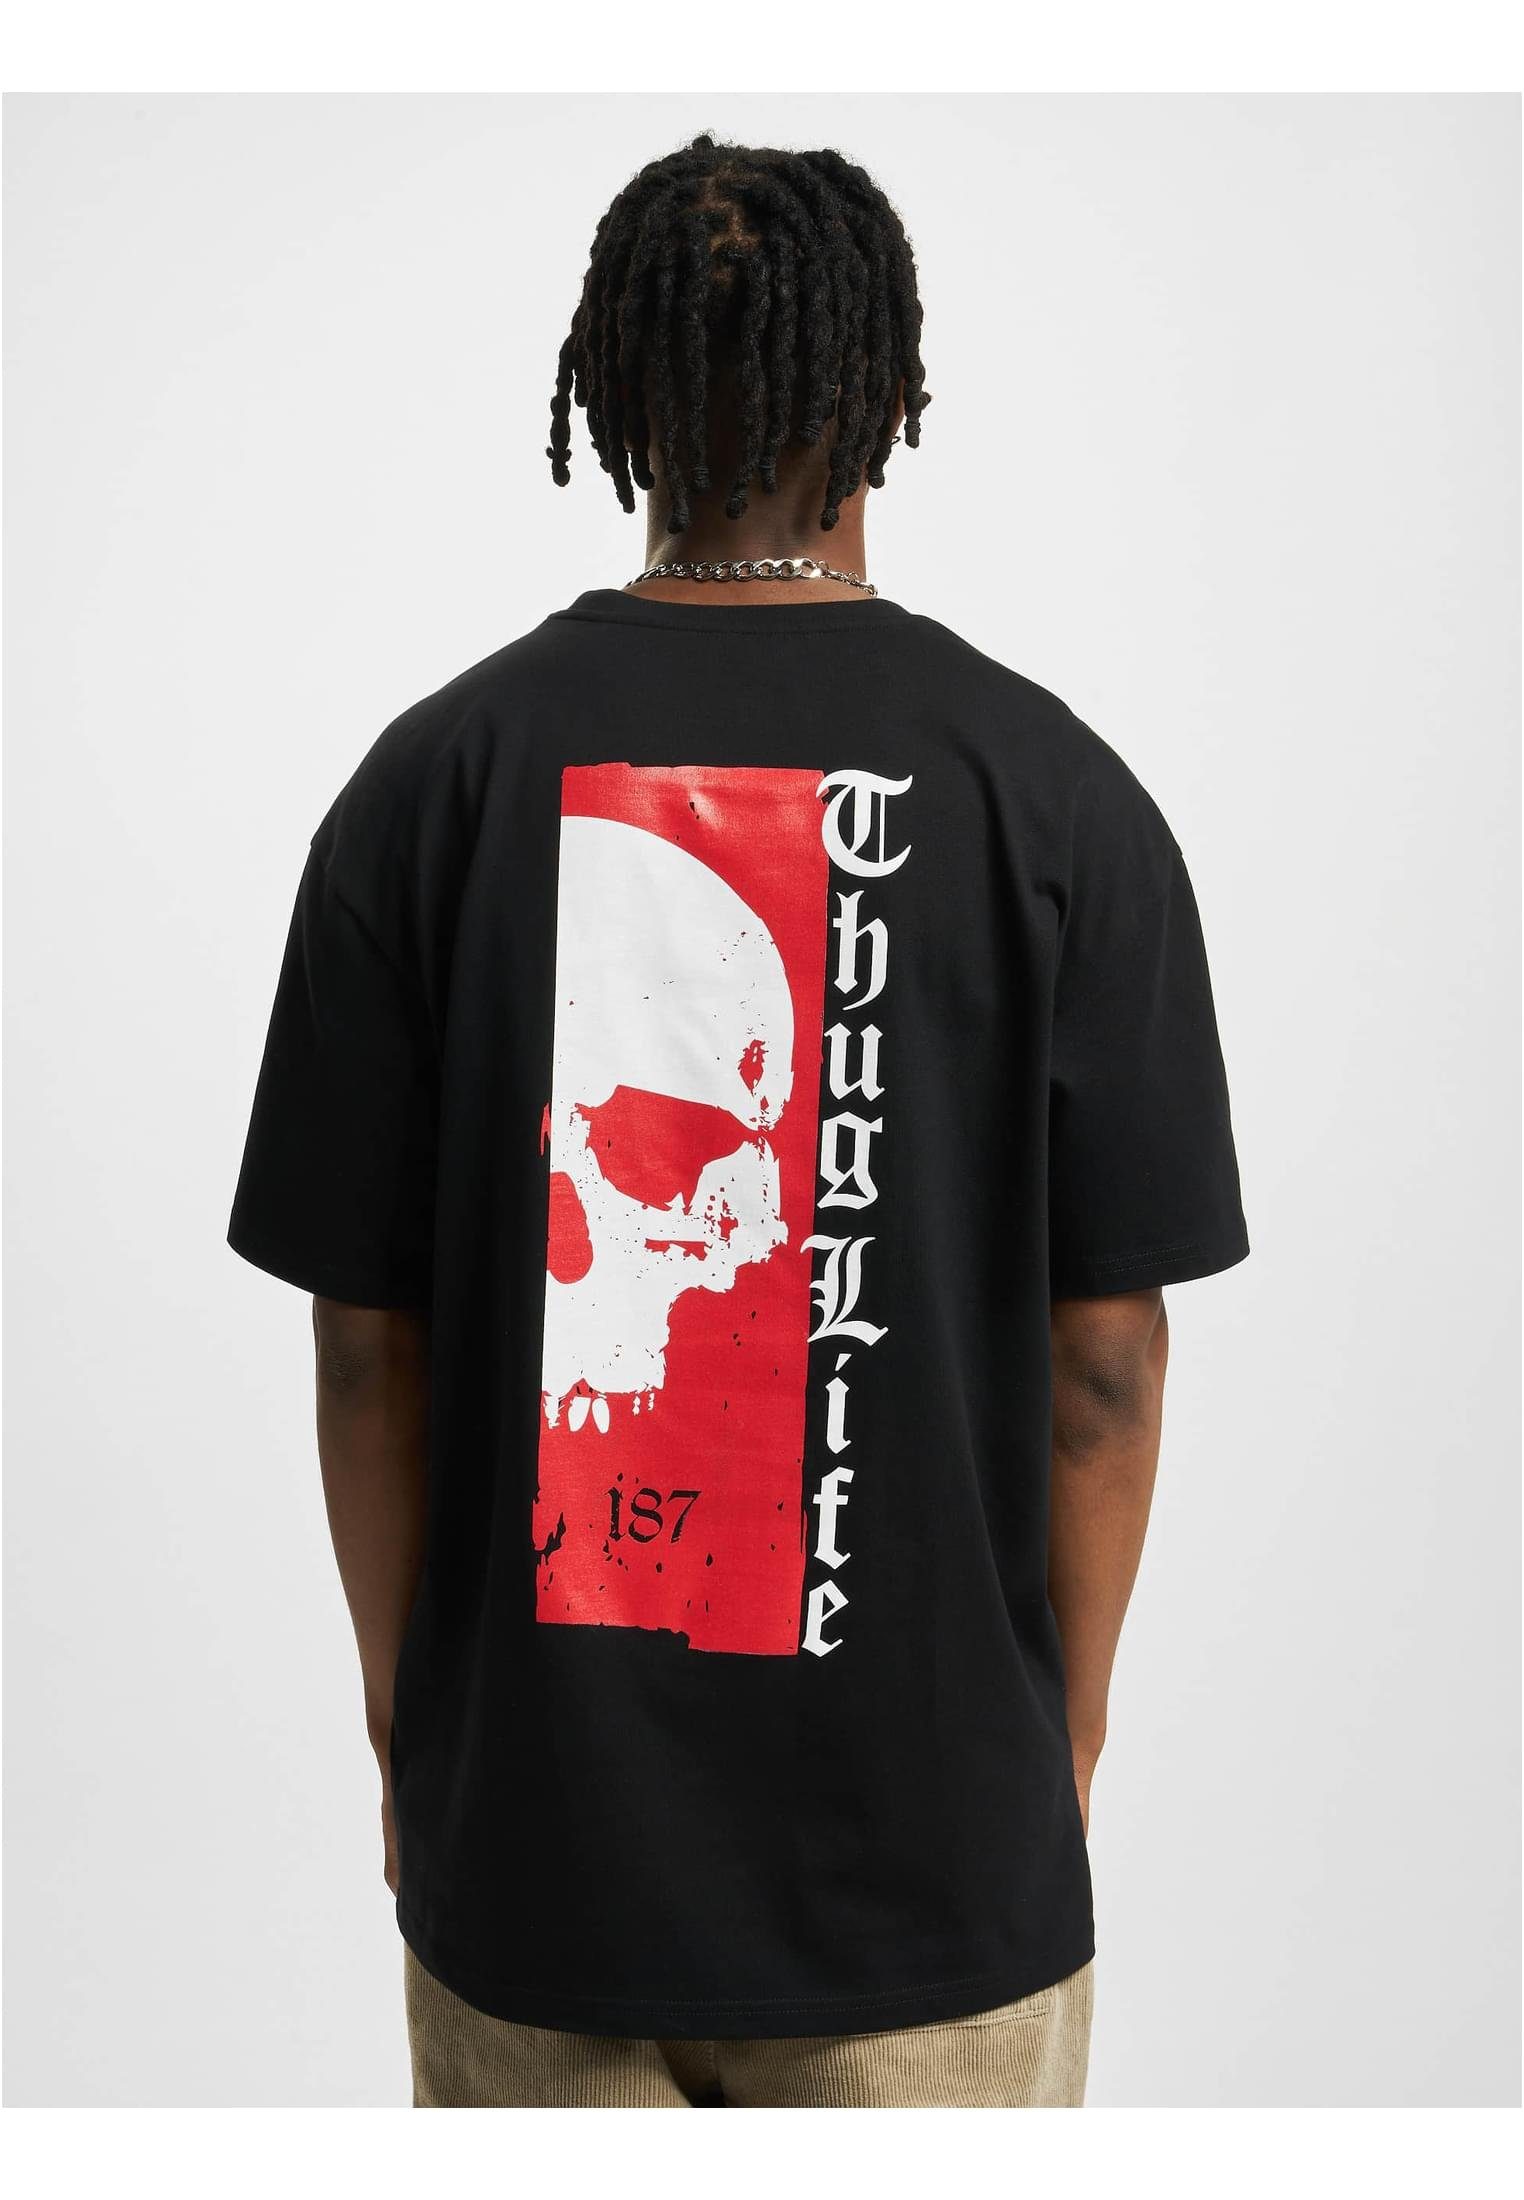 TrojanHorse Thug Thug Life Life (1-tlg) Tshirt T-Shirt Herren